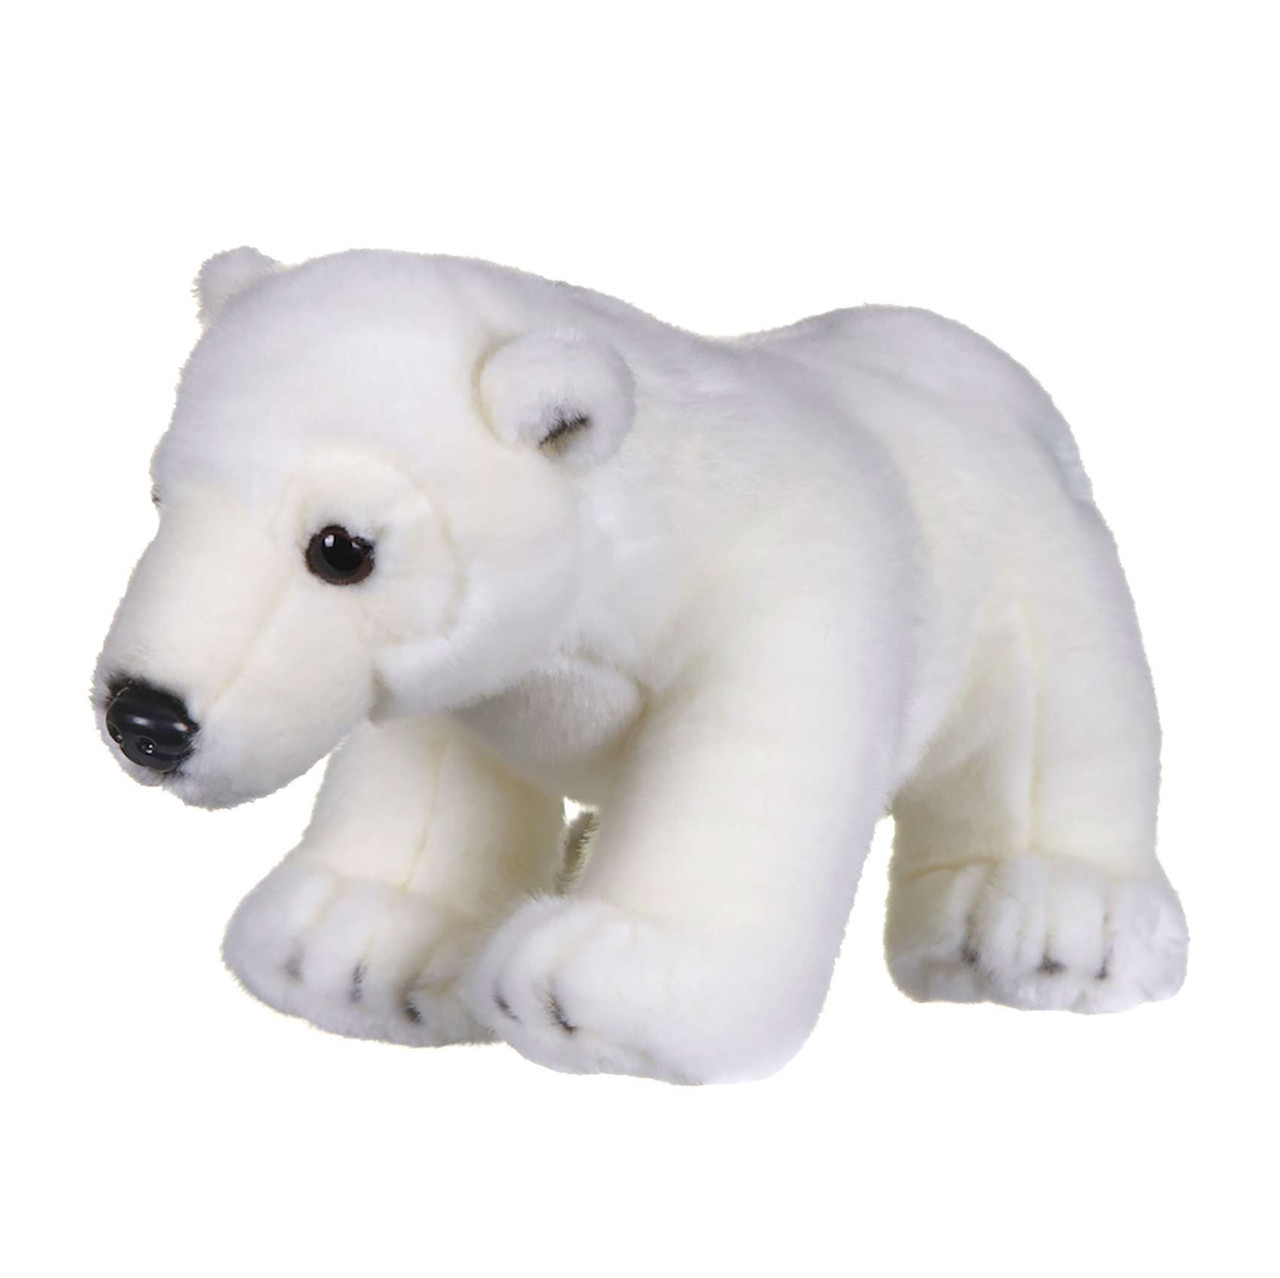 polar bear soft